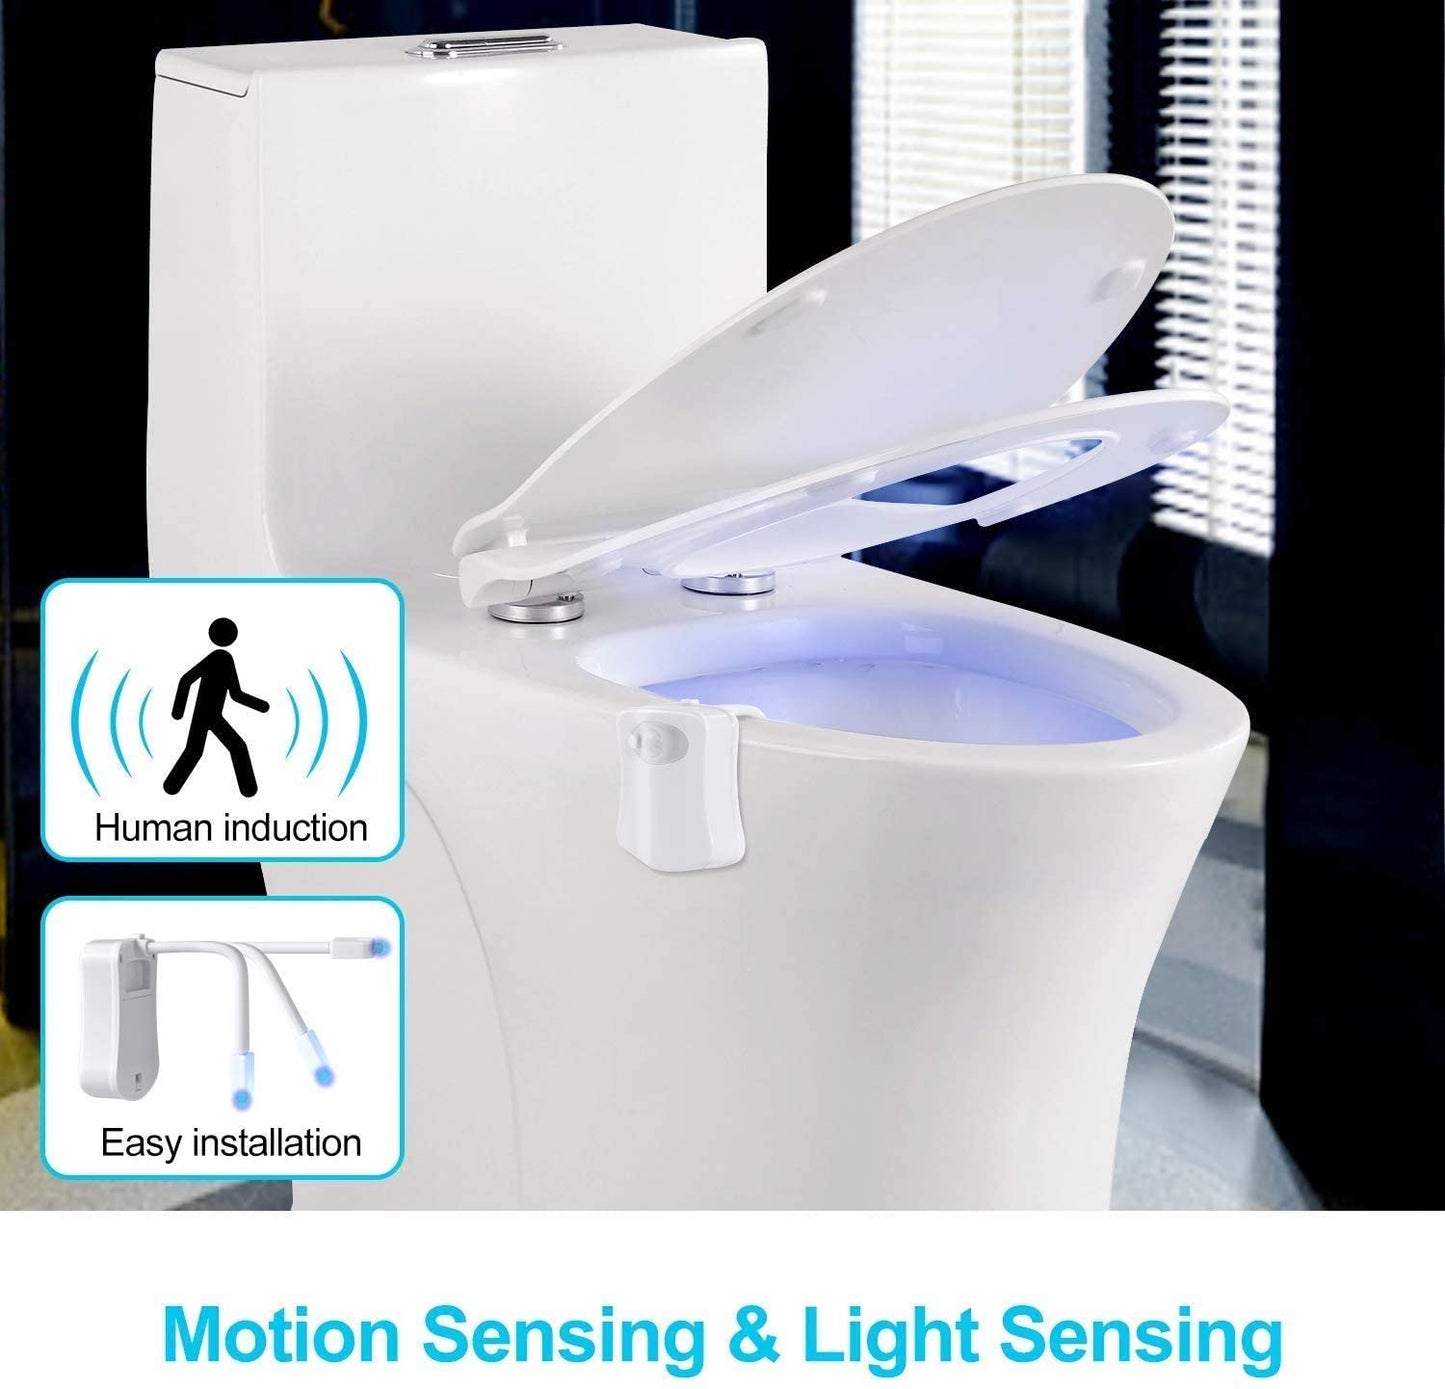 8 Colors Lamp Toilet Bowl Night Light LED Motion Activated Seat Sensor  Bathroom - Night Lights, Facebook Marketplace